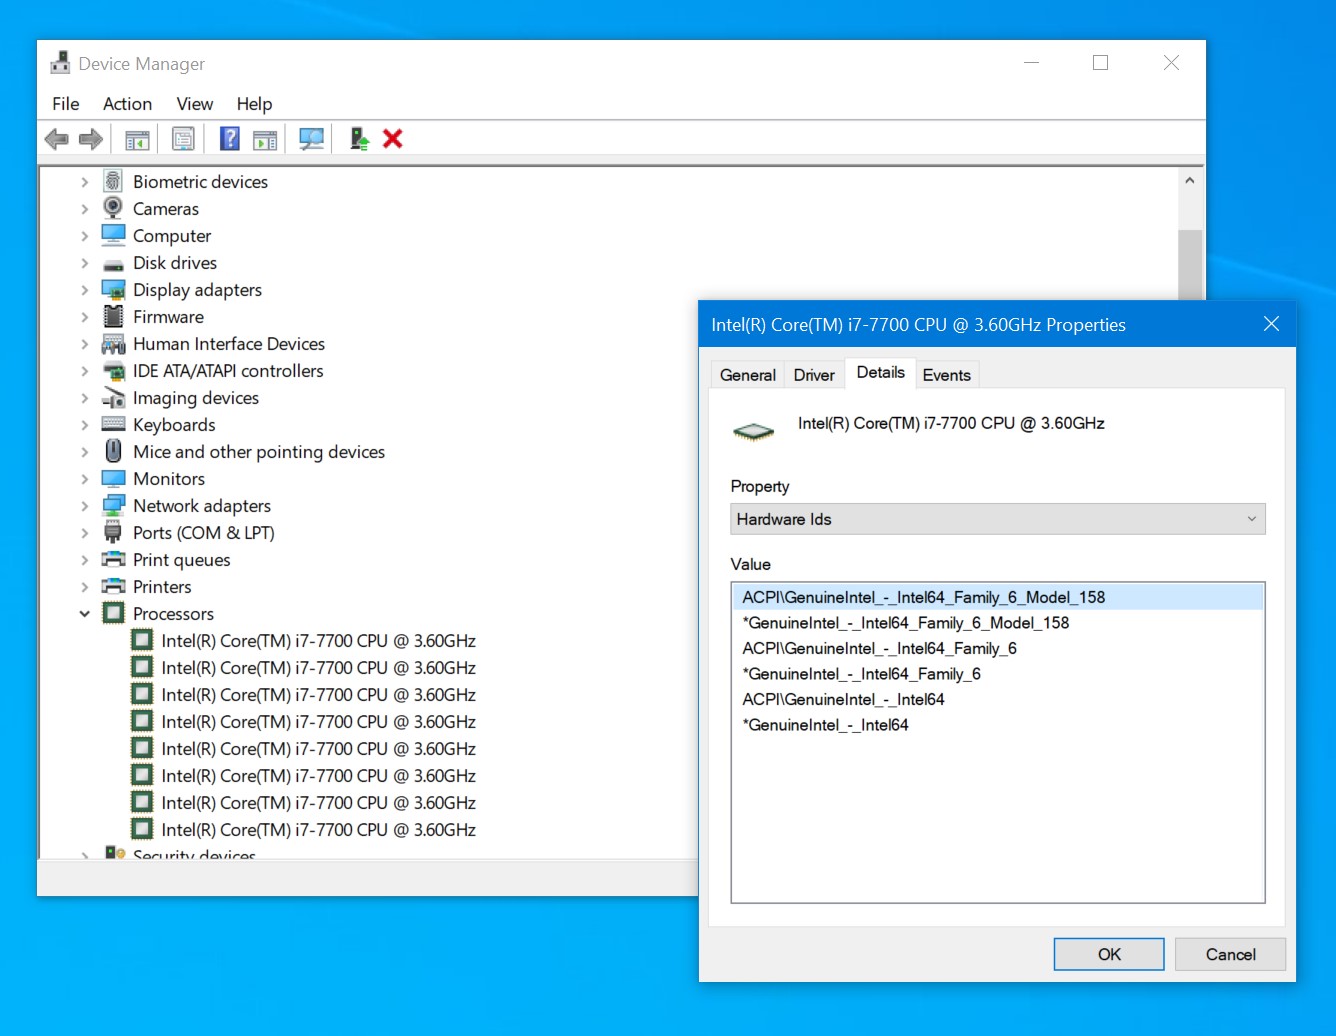 New Windows 10 Insider Preview Slow Build 18342 (19H1) - Feb. 27 713fddb143972c0c28625ea1f55a1e38.jpg